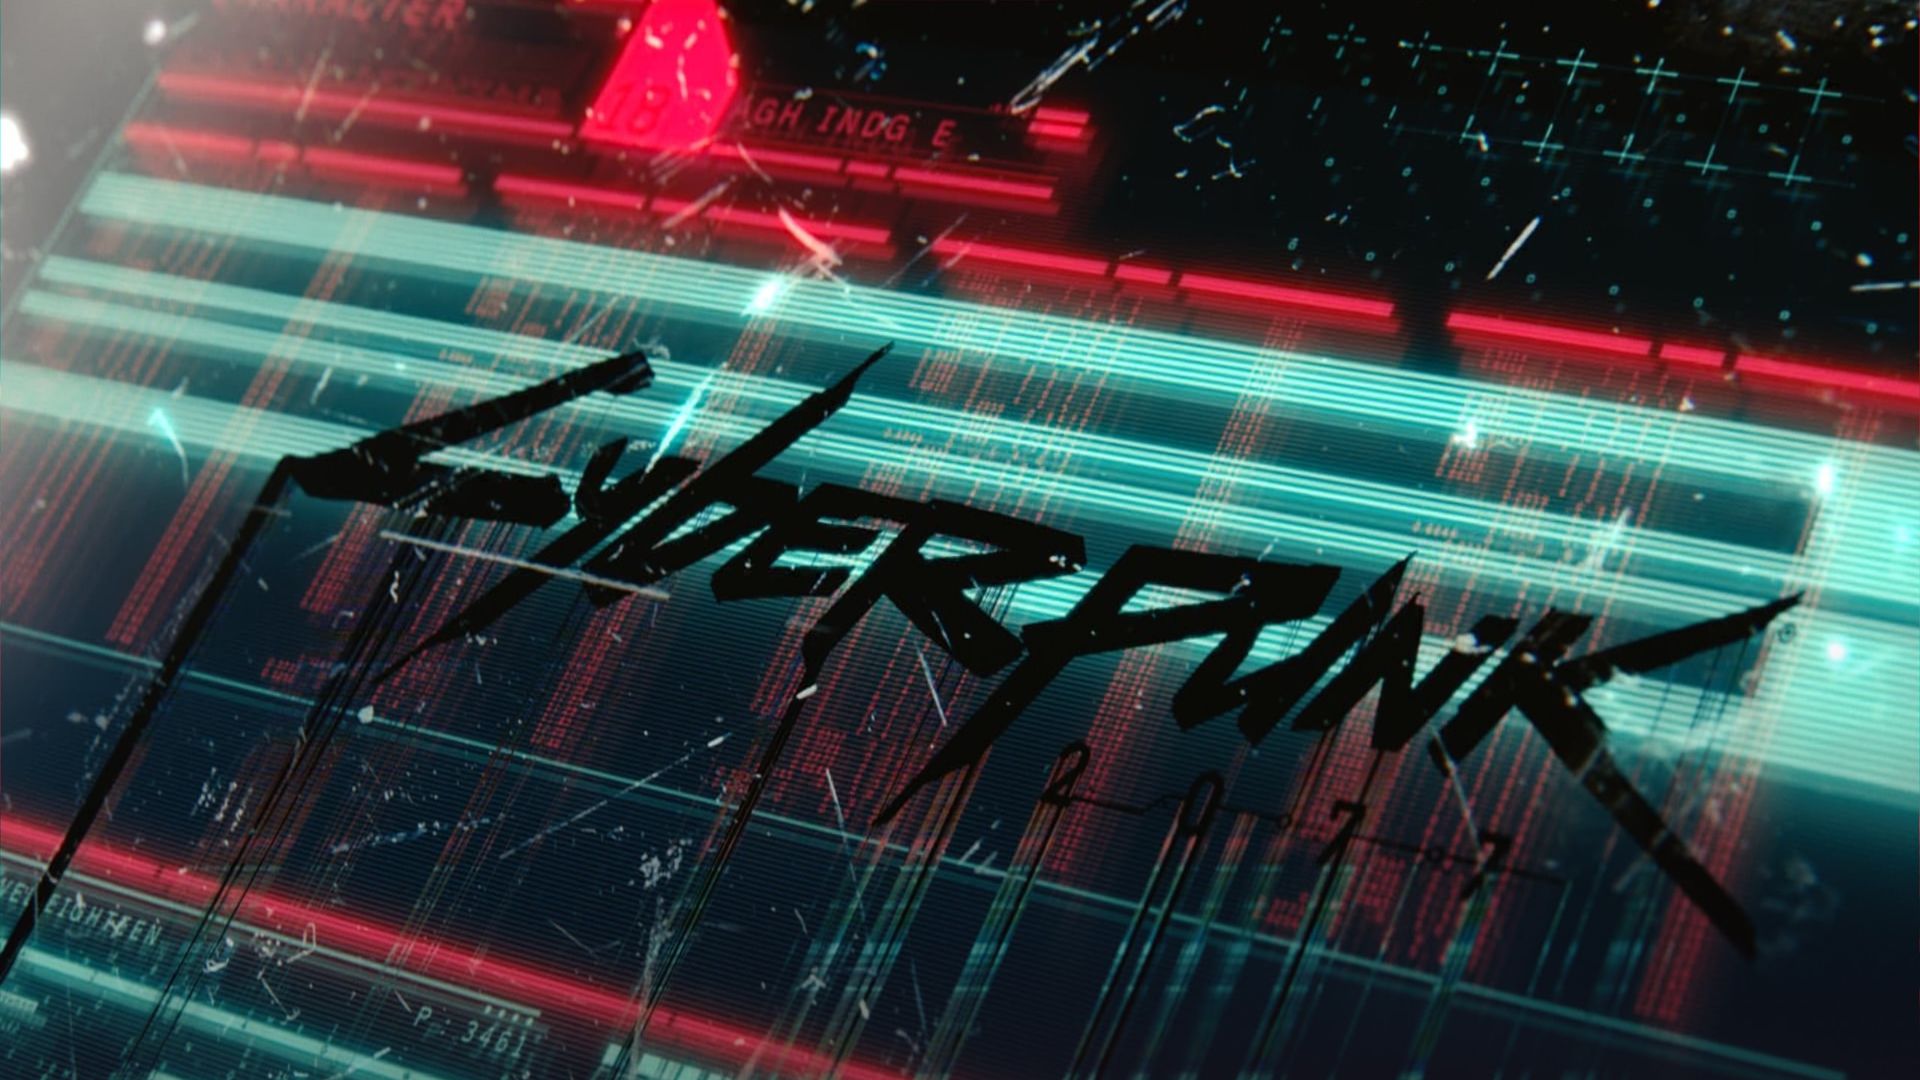 Screenshot from Cyberpunk 2077's starting screen taken by Kirstin Baum